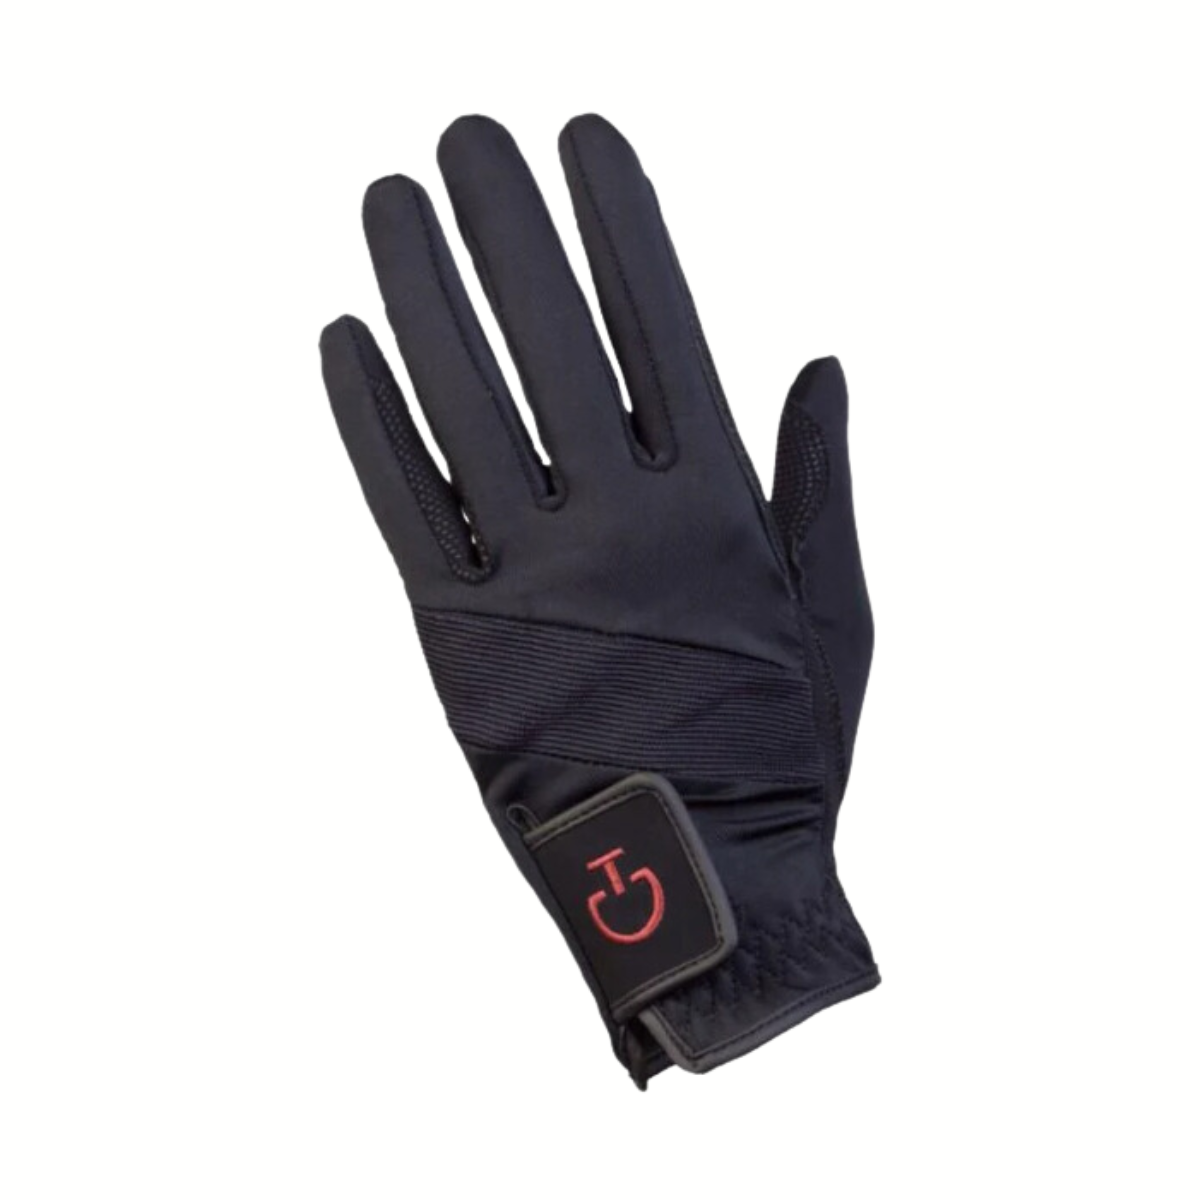 Cavalleria Toscana Tech Gloves in Black - 7.5